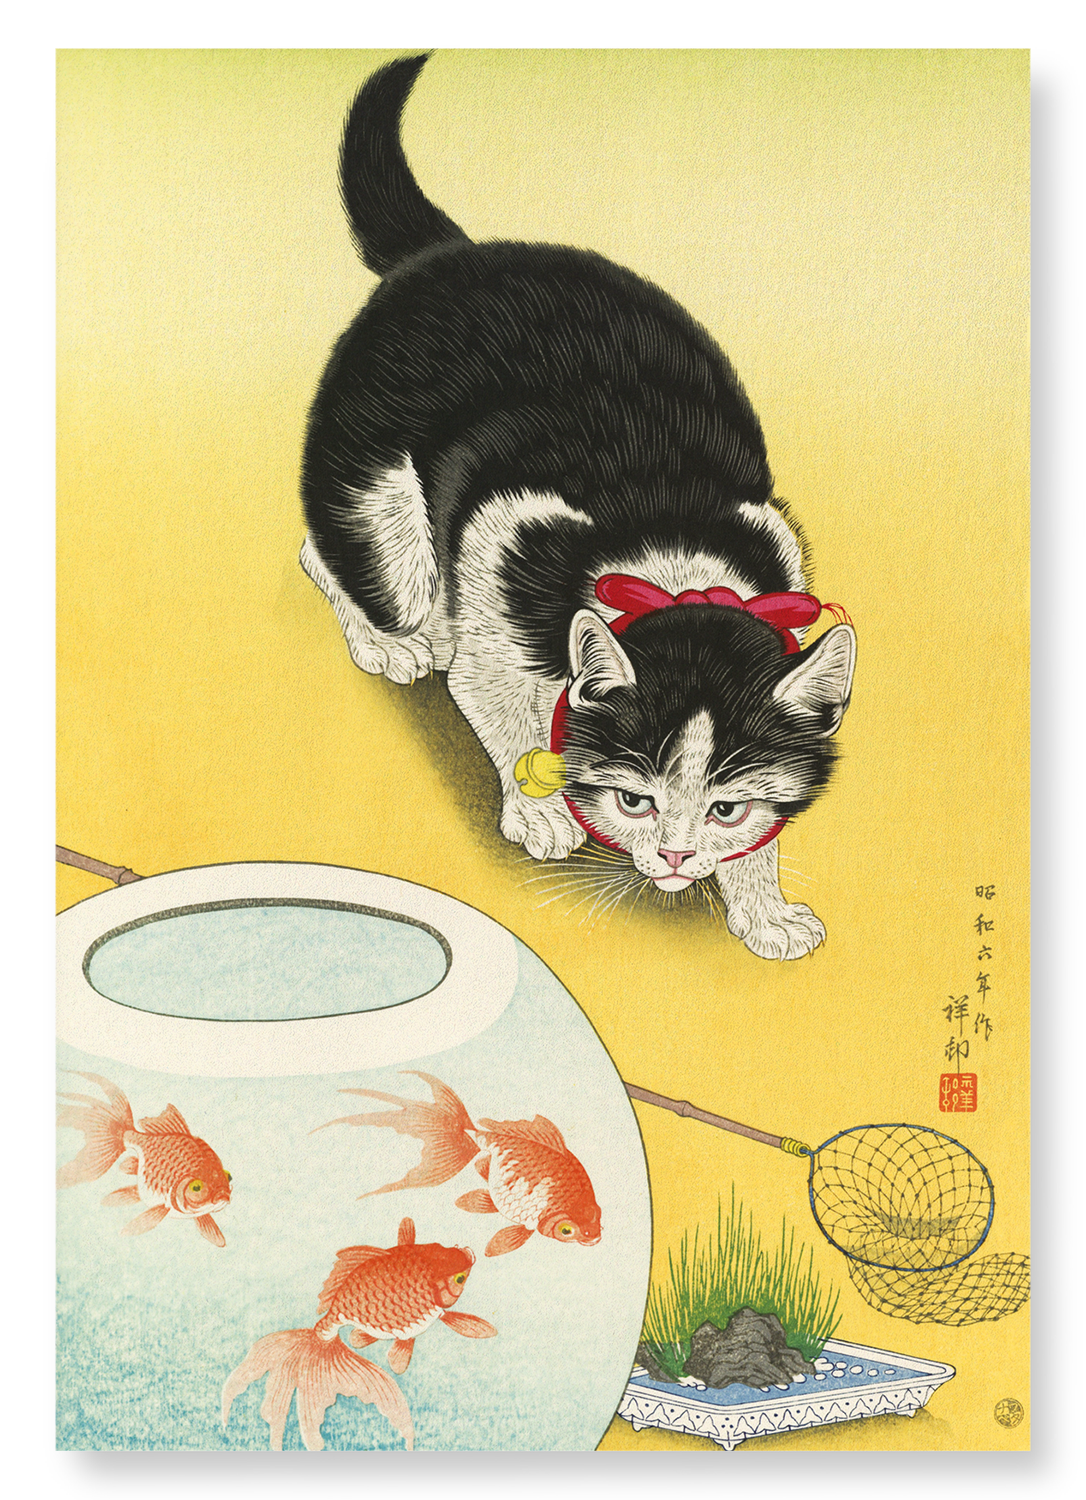 GOLDFISH BOWL AND A CAT: Japanese Art Print